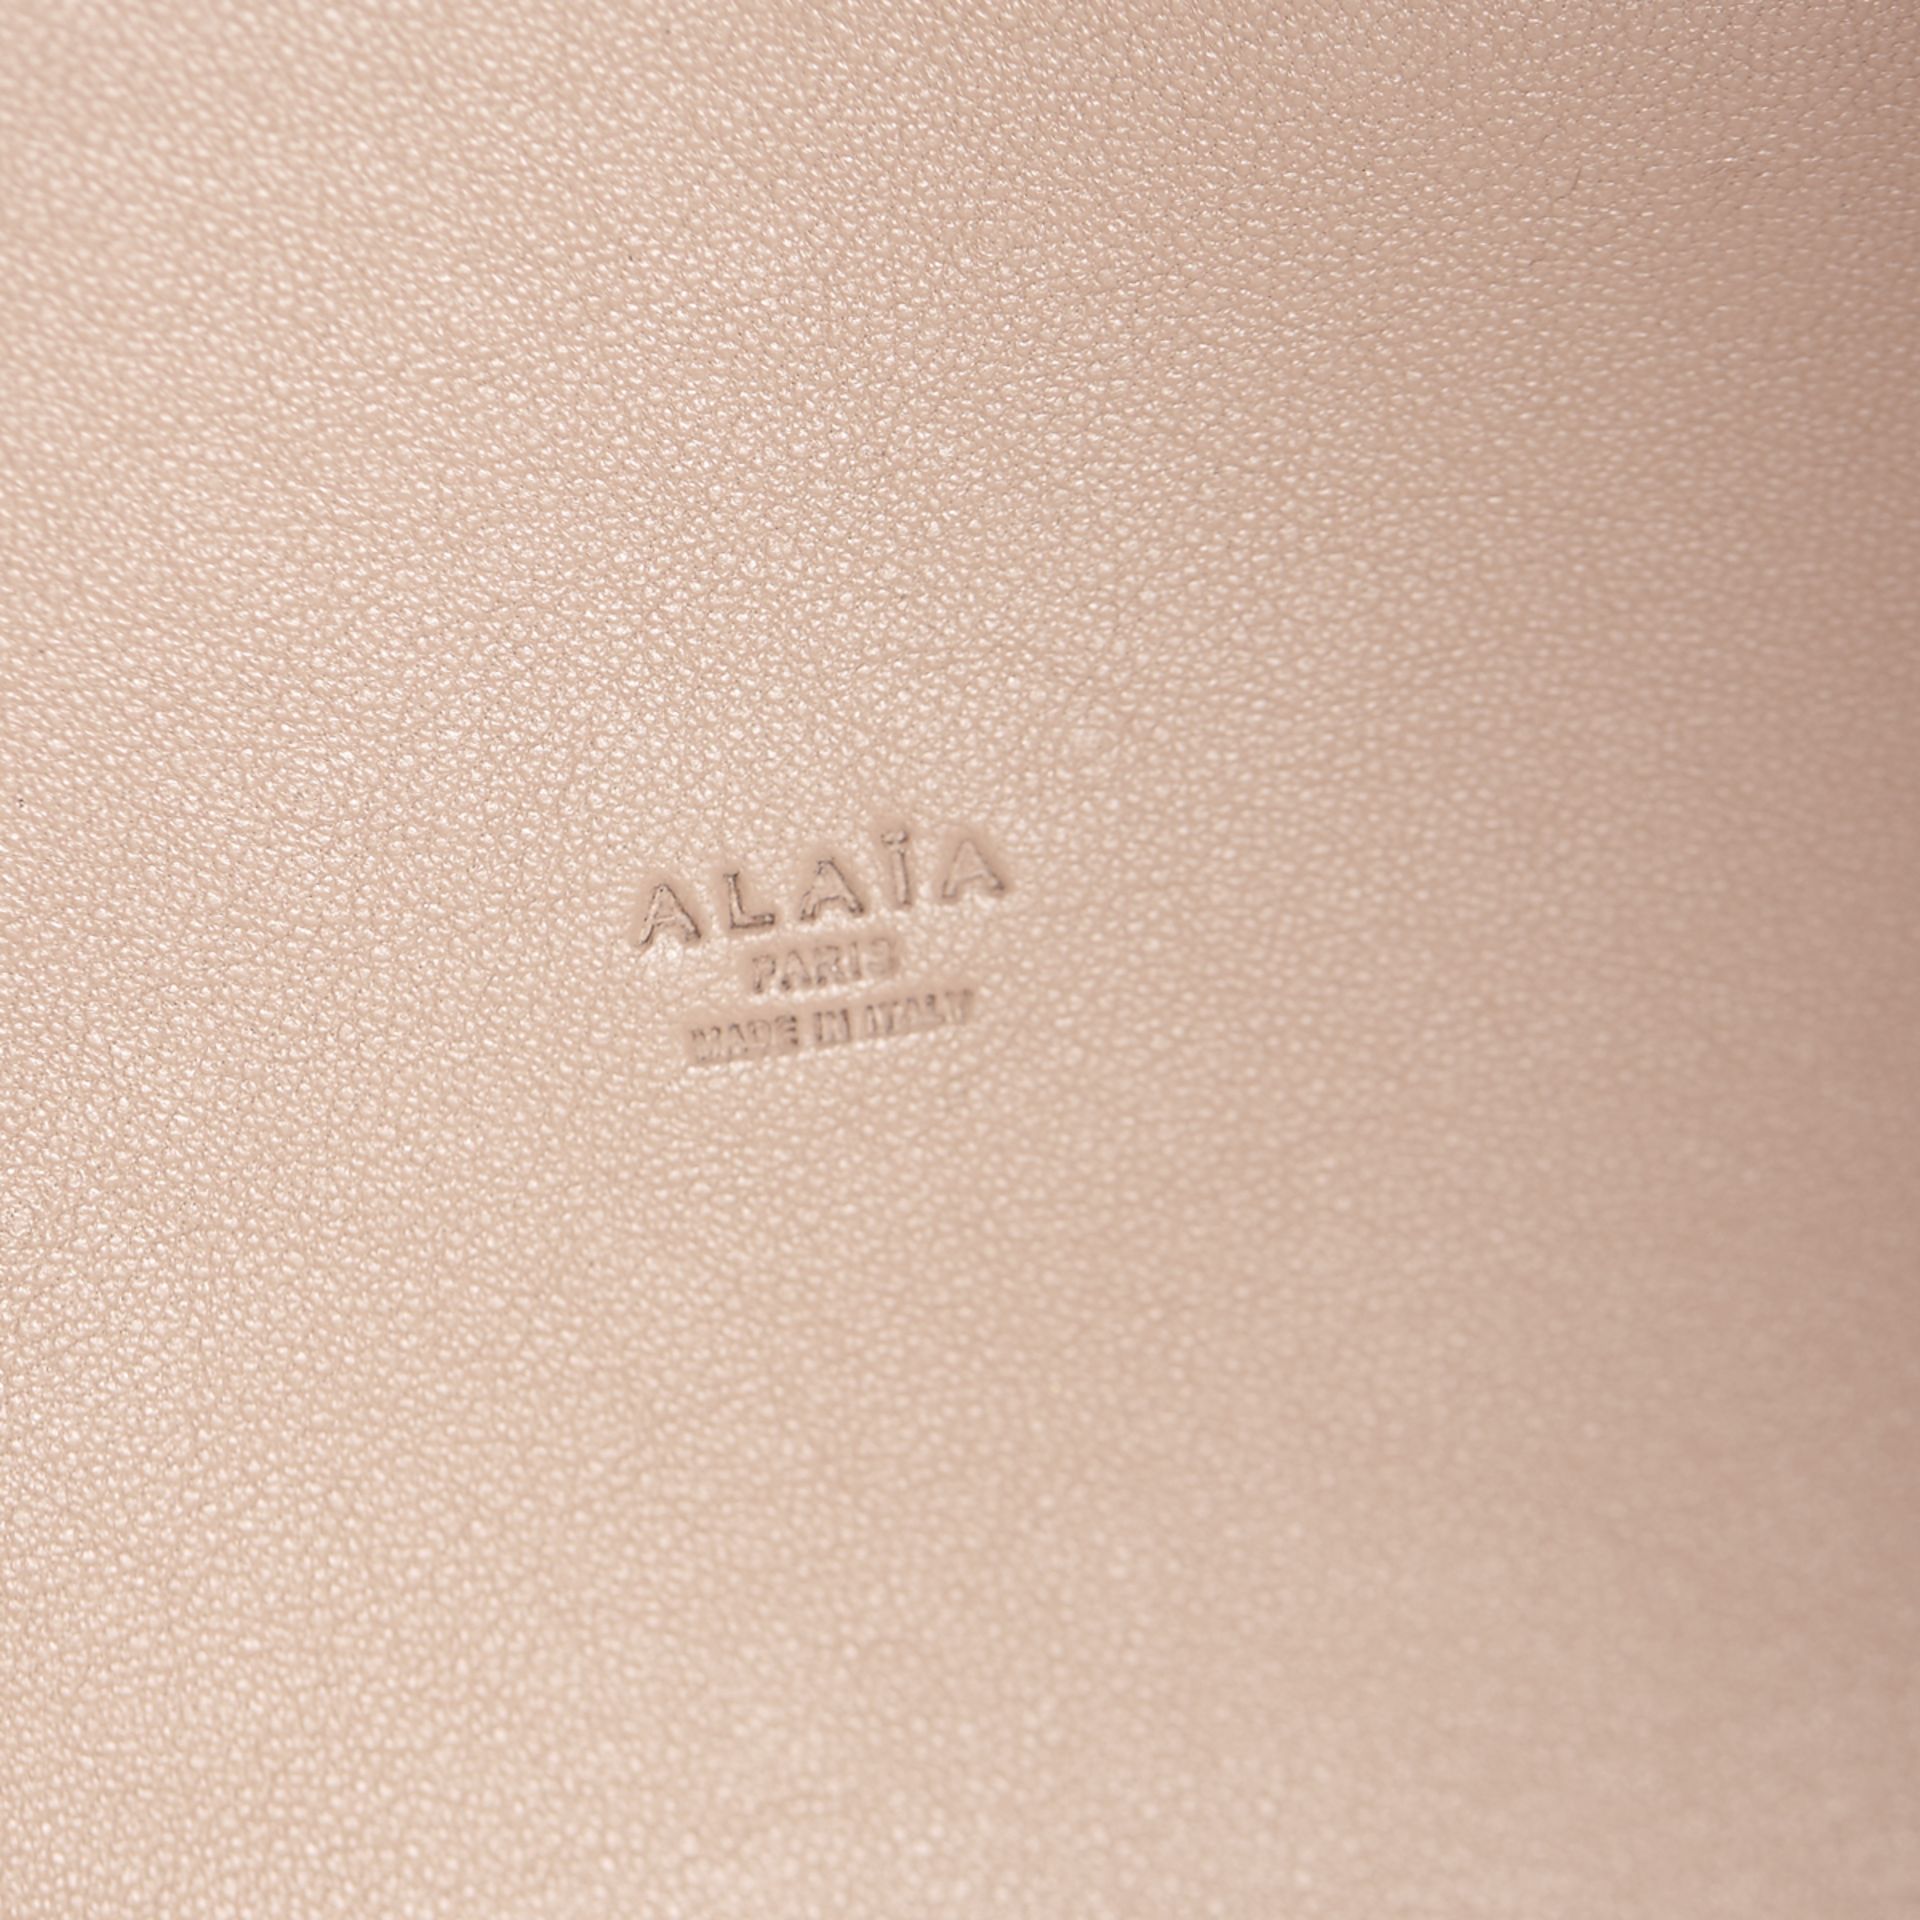 ALAIA Perforated Shopper - Image 6 of 9